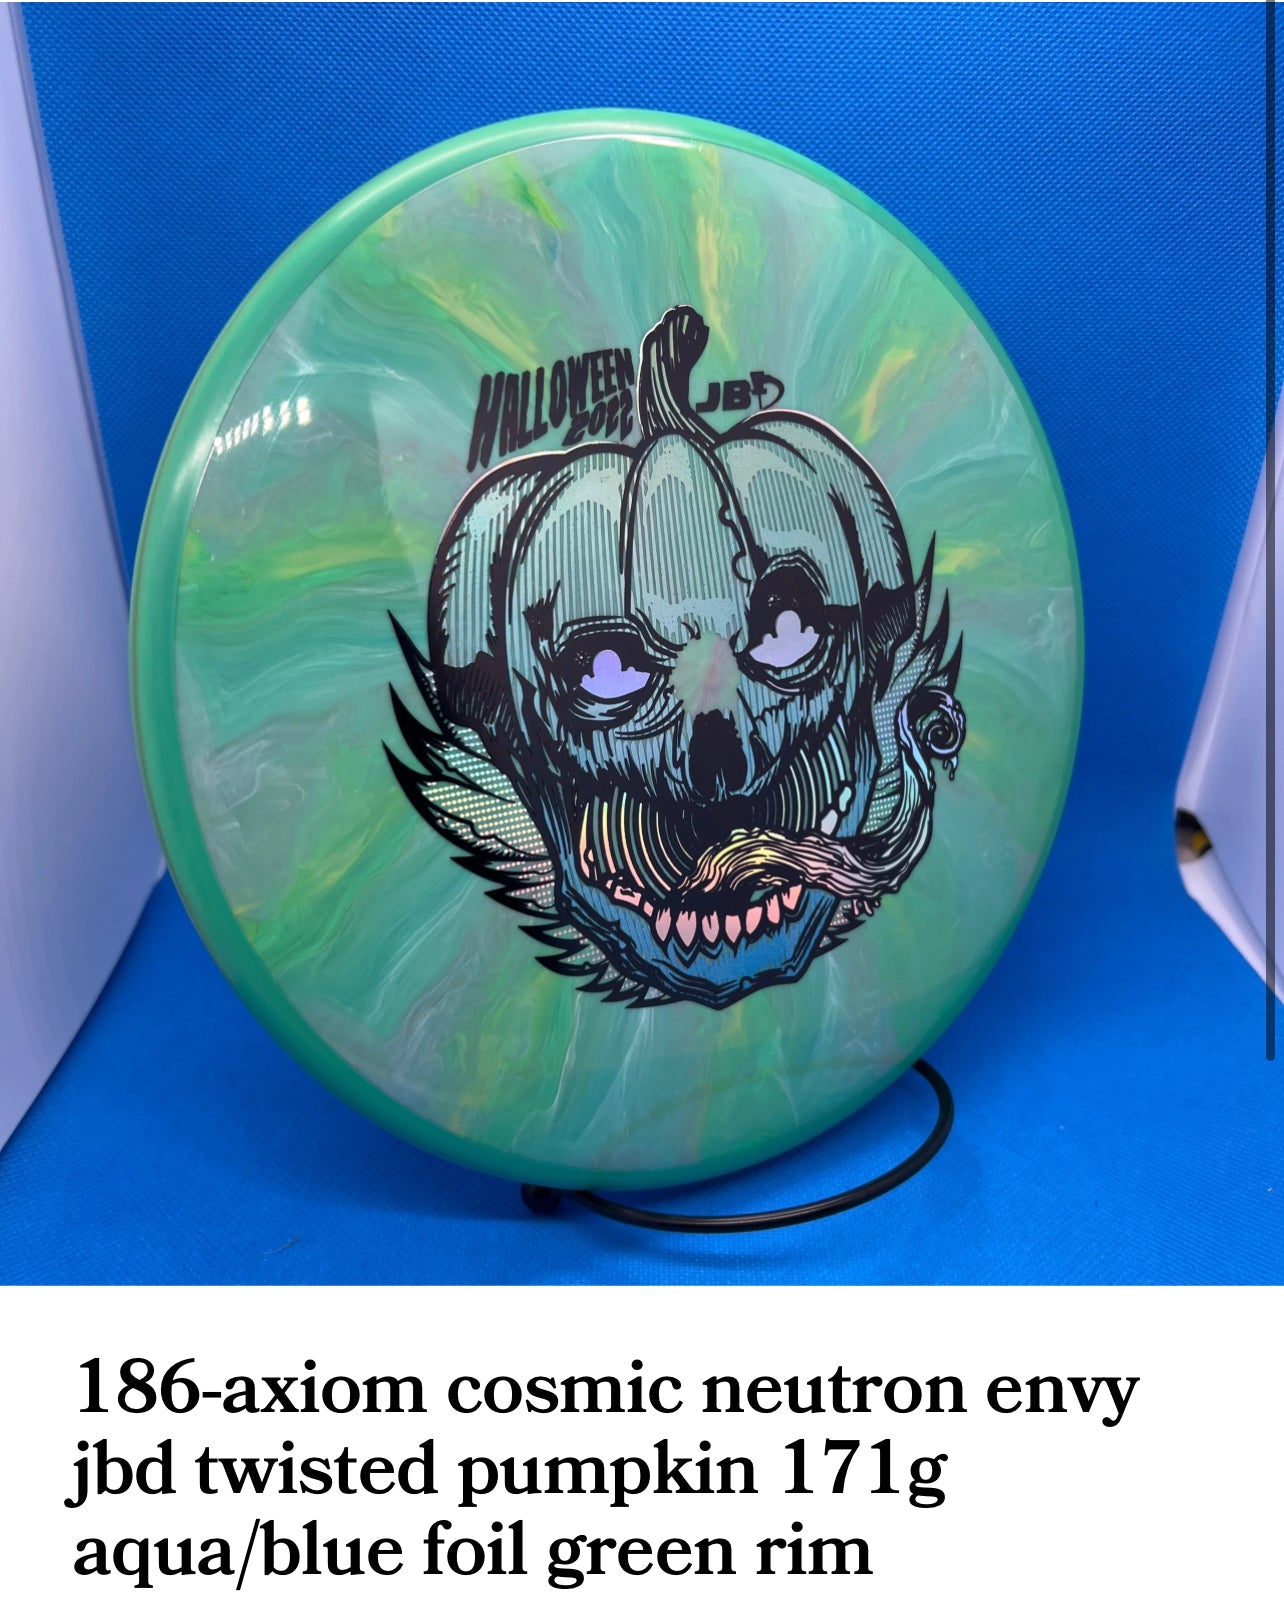 Axiom cosmic neutron envy’s twisted pumpkin JBD custom stamp